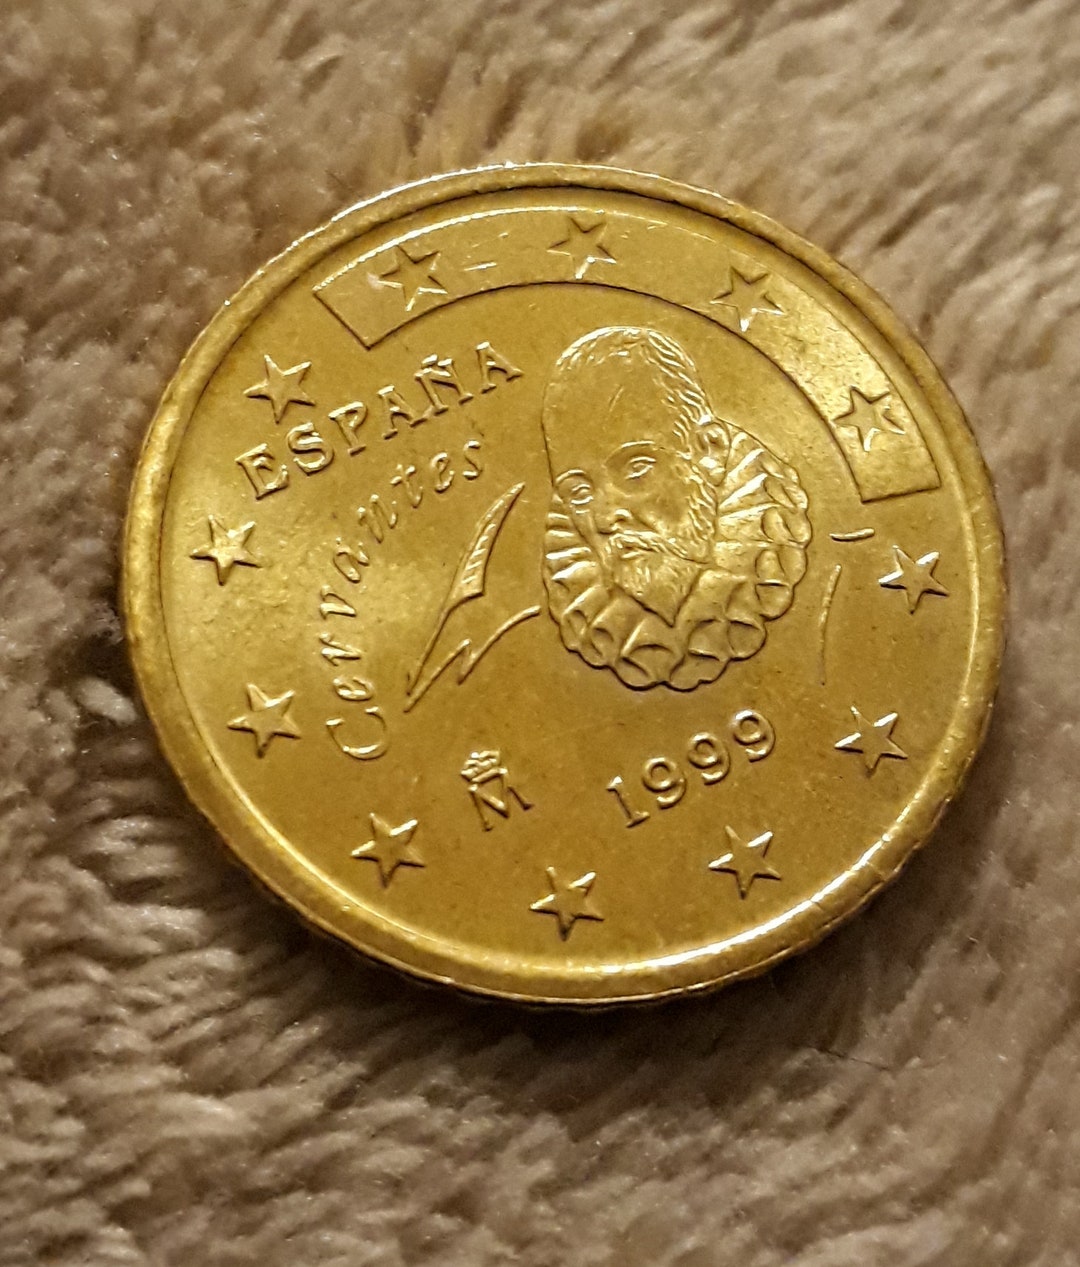 SPAIN ESPANA 50 EURO FIFTY CENT 1999 COIN